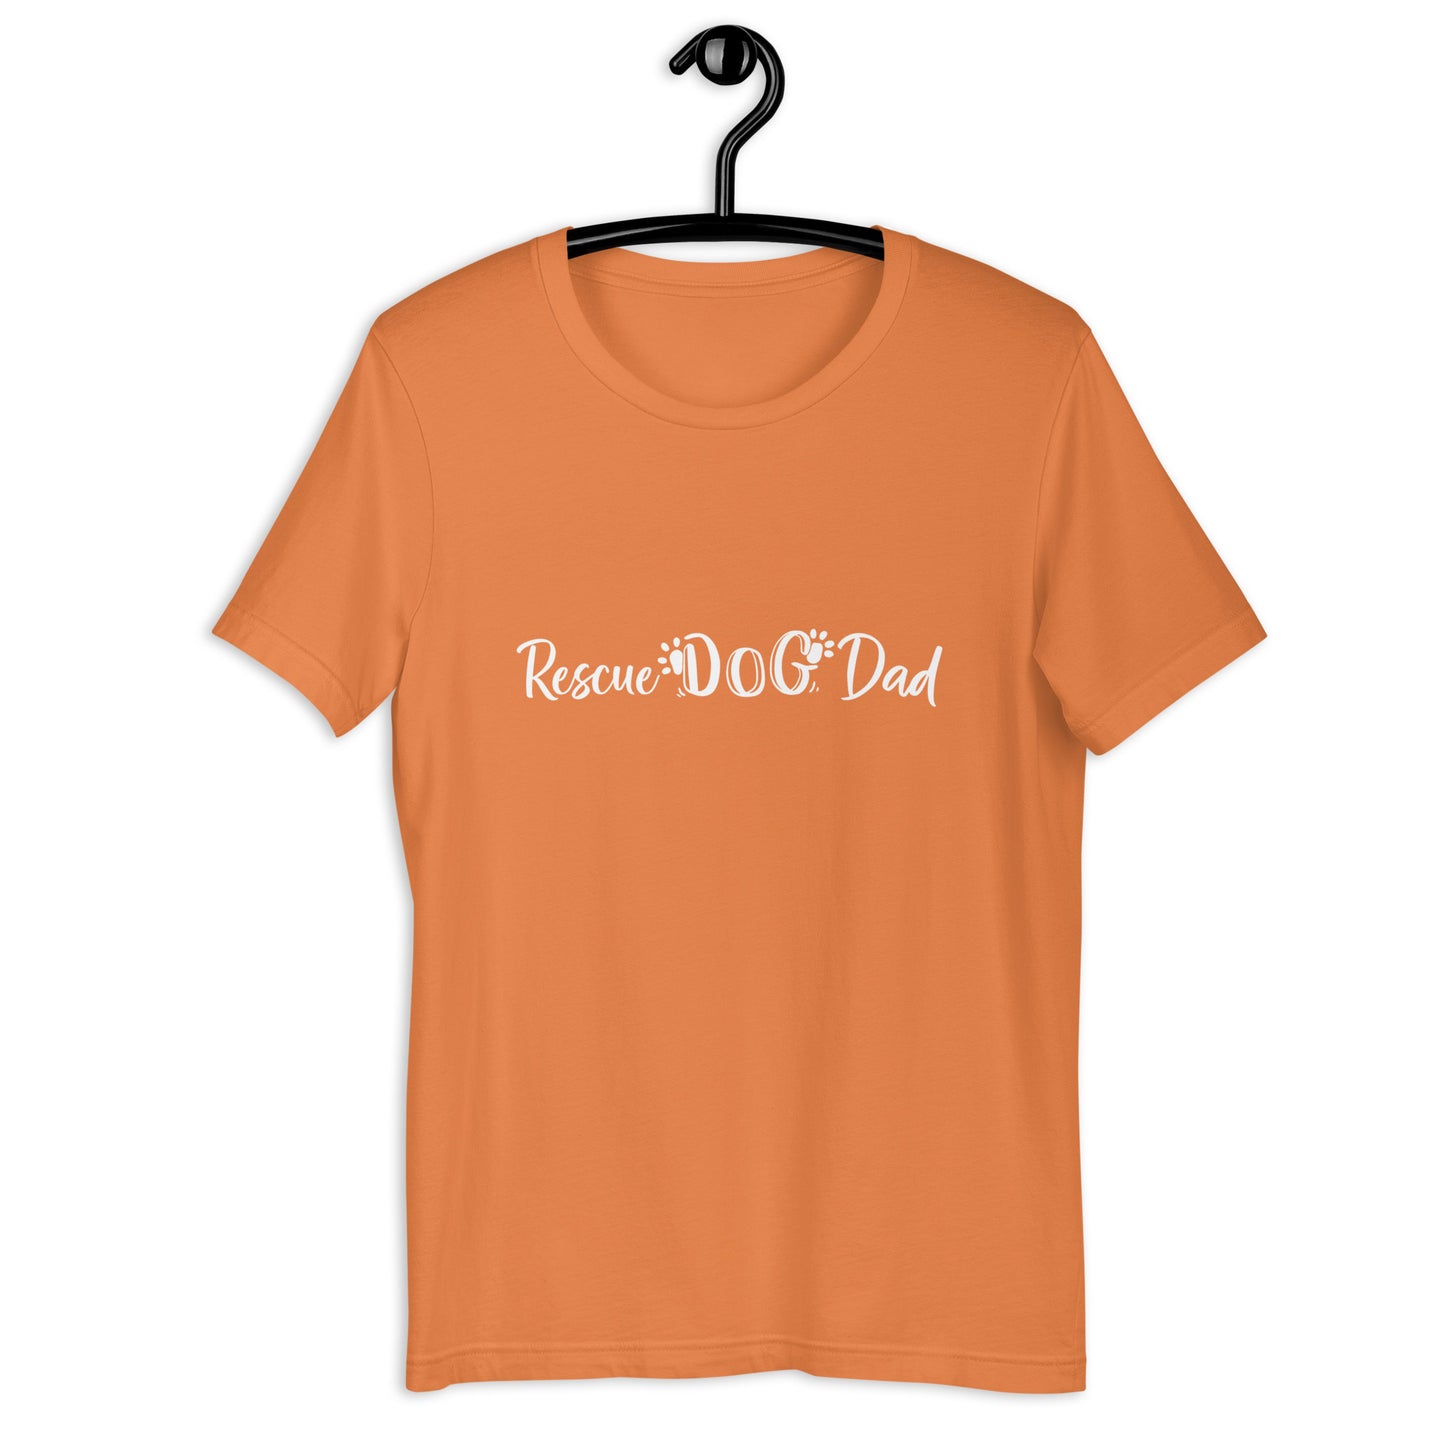 RESCUE DOG DAD - Unisex t-shirt